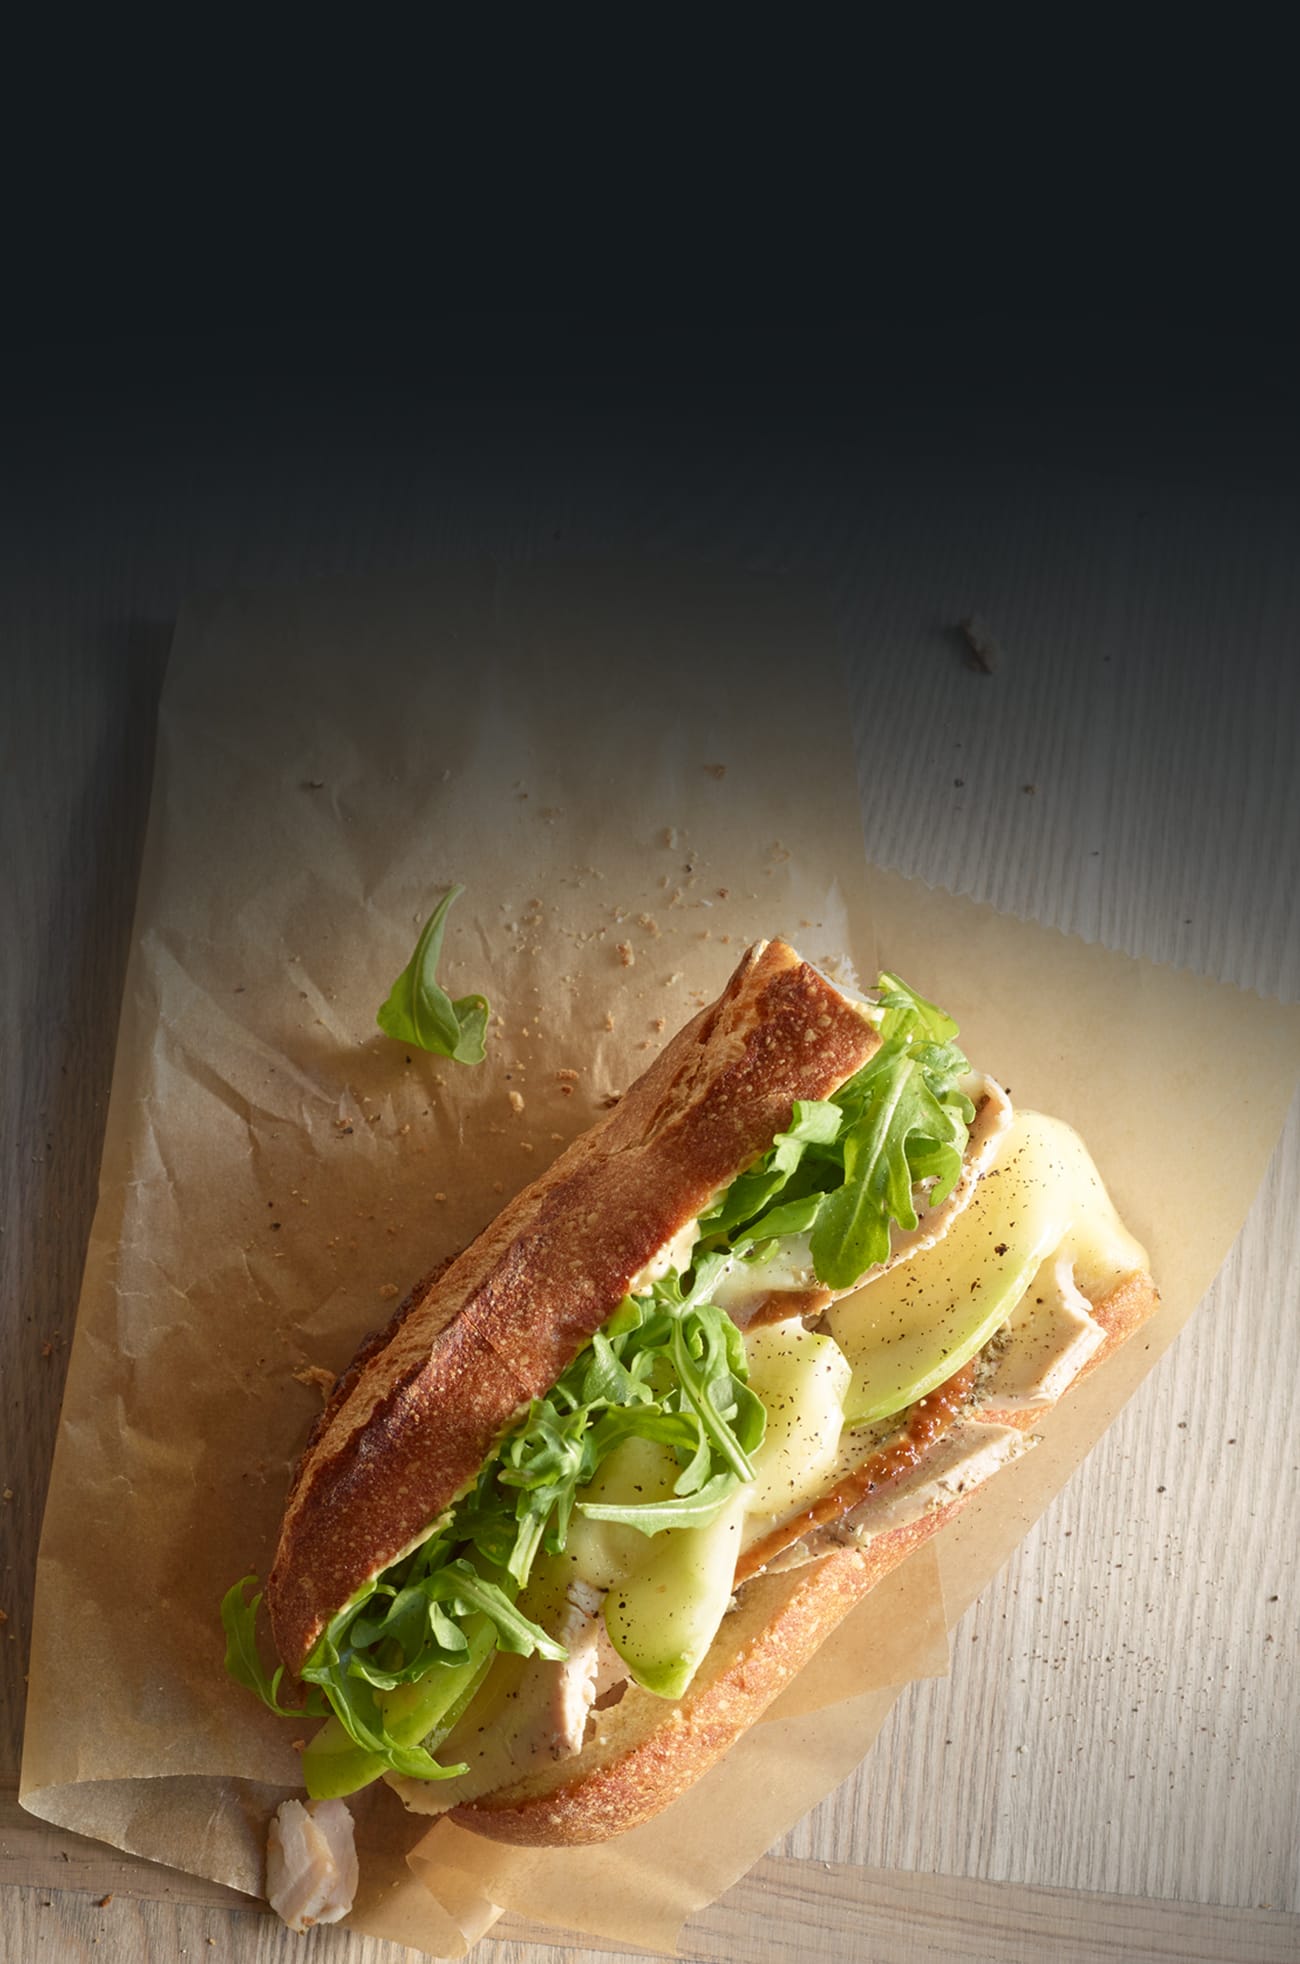 Dartcor Food Services - sandwich on artisan bread